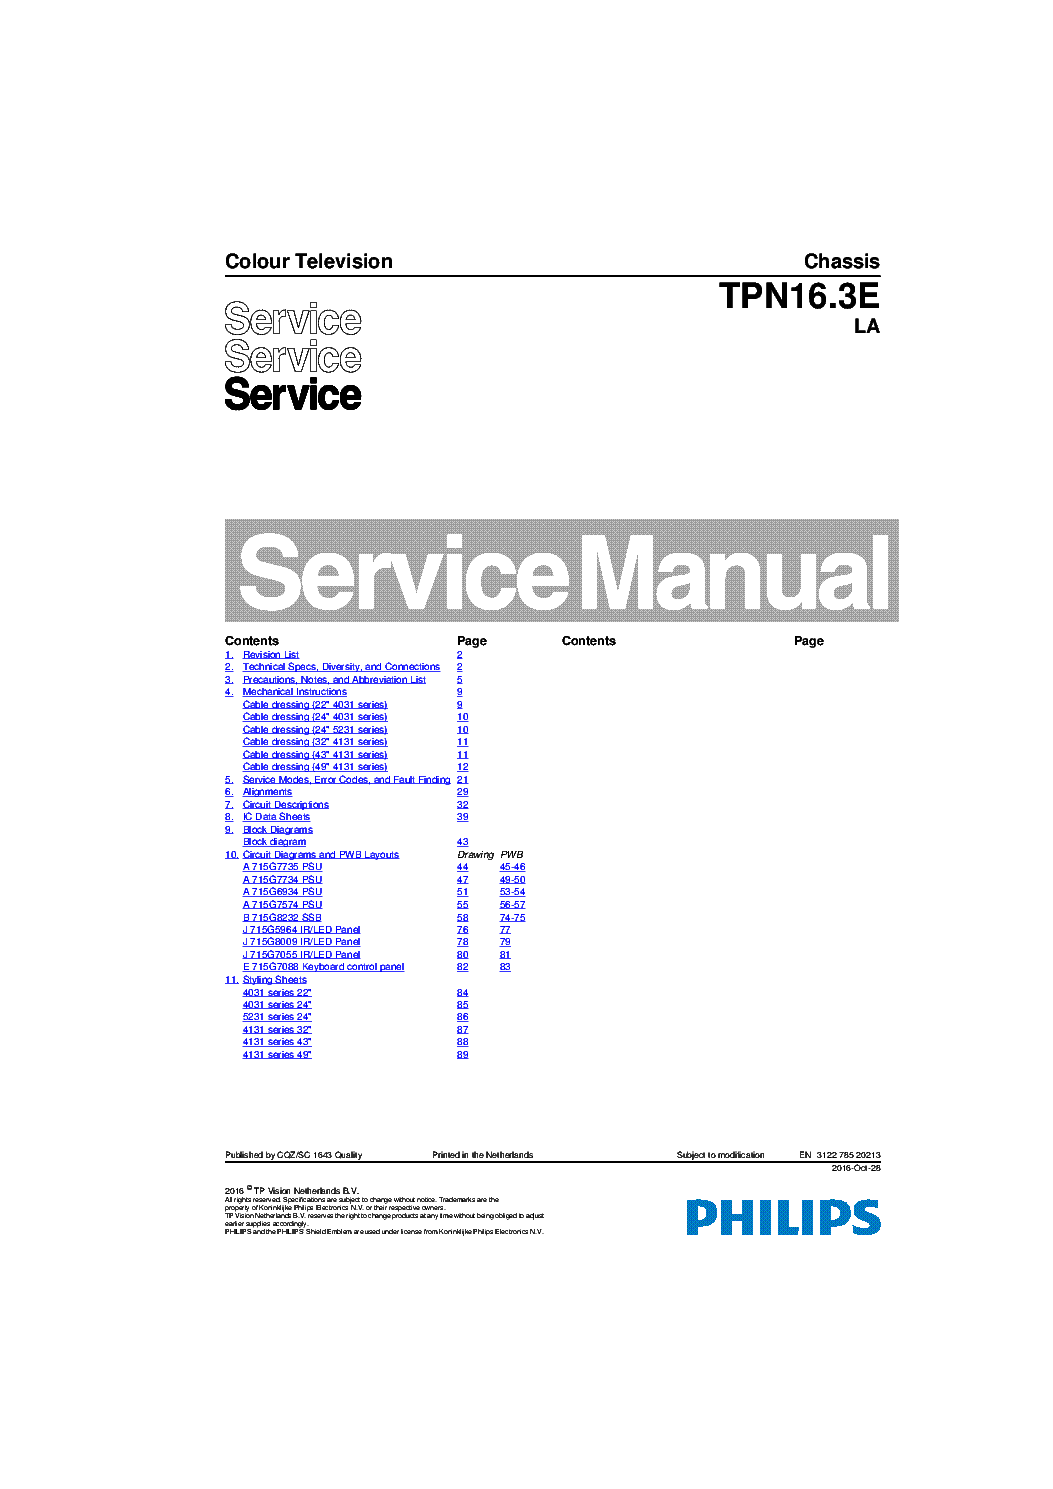 PHILIPS CHASSIS TPN16.3E LA SM service manual (1st page)